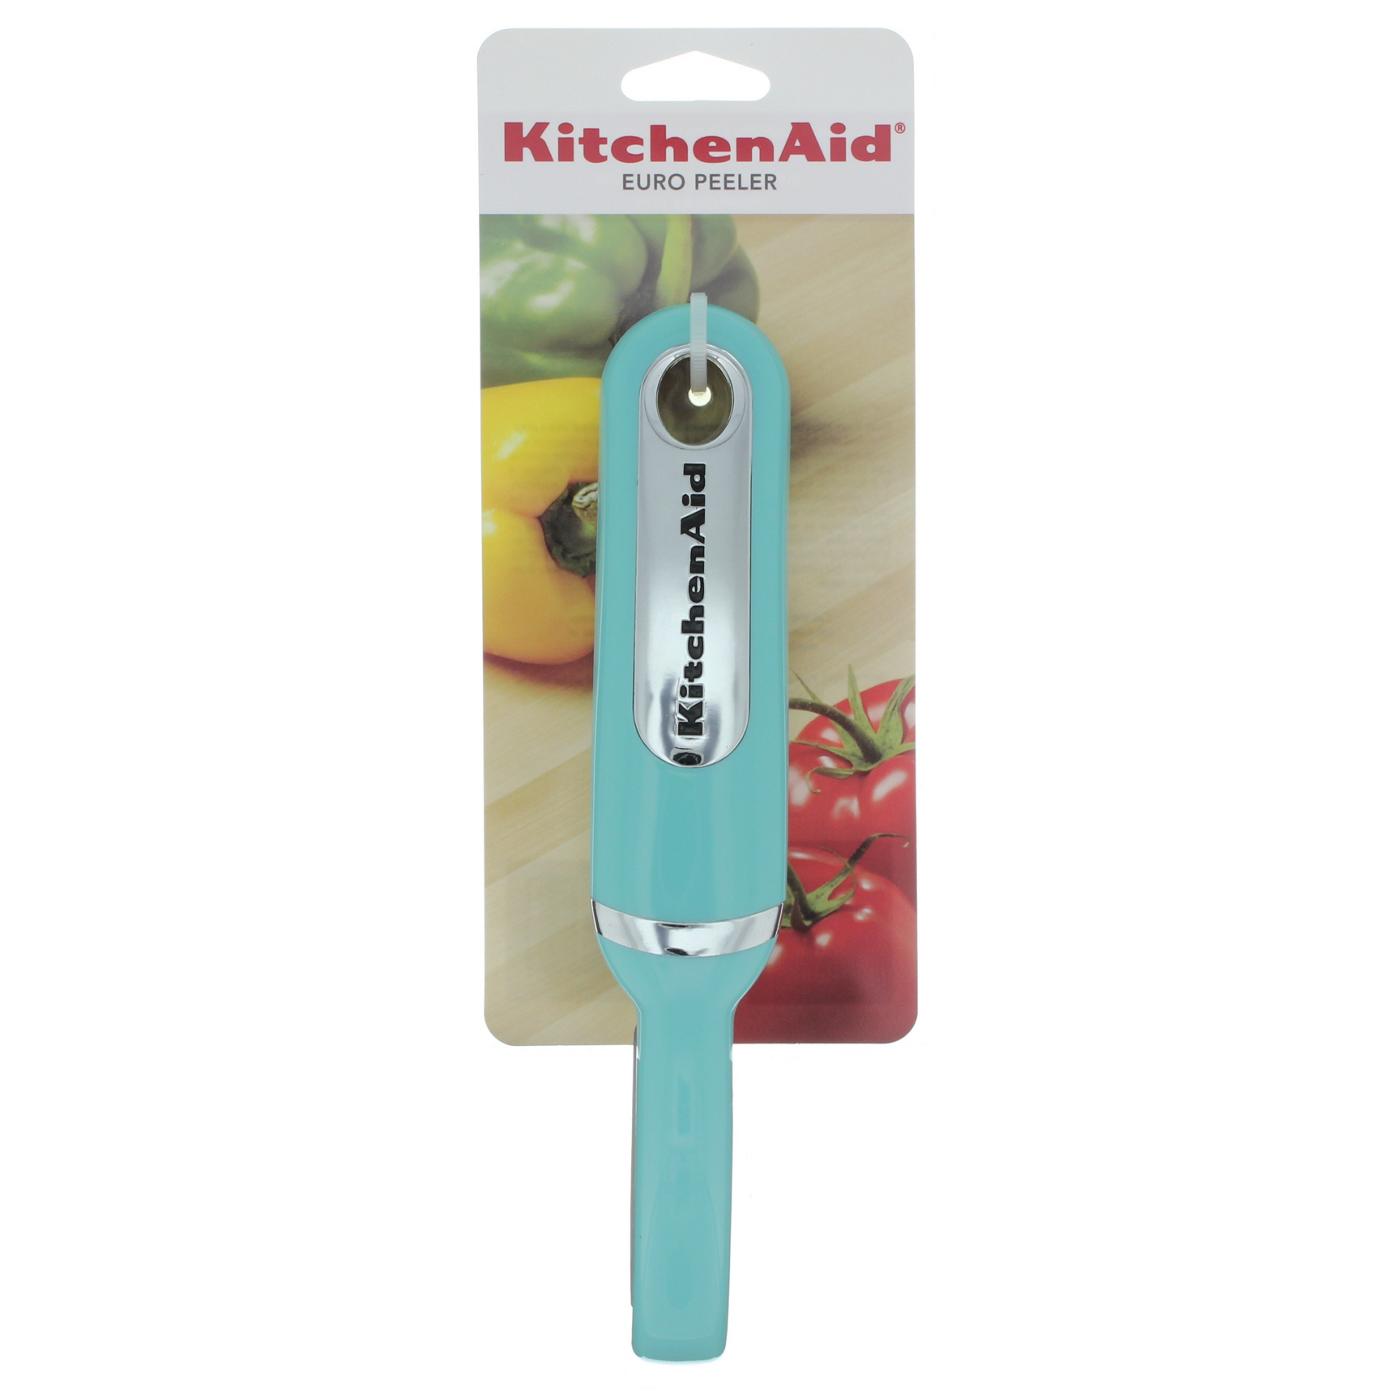 KitchenAid Gadgets KitchenAid Euro Peeler